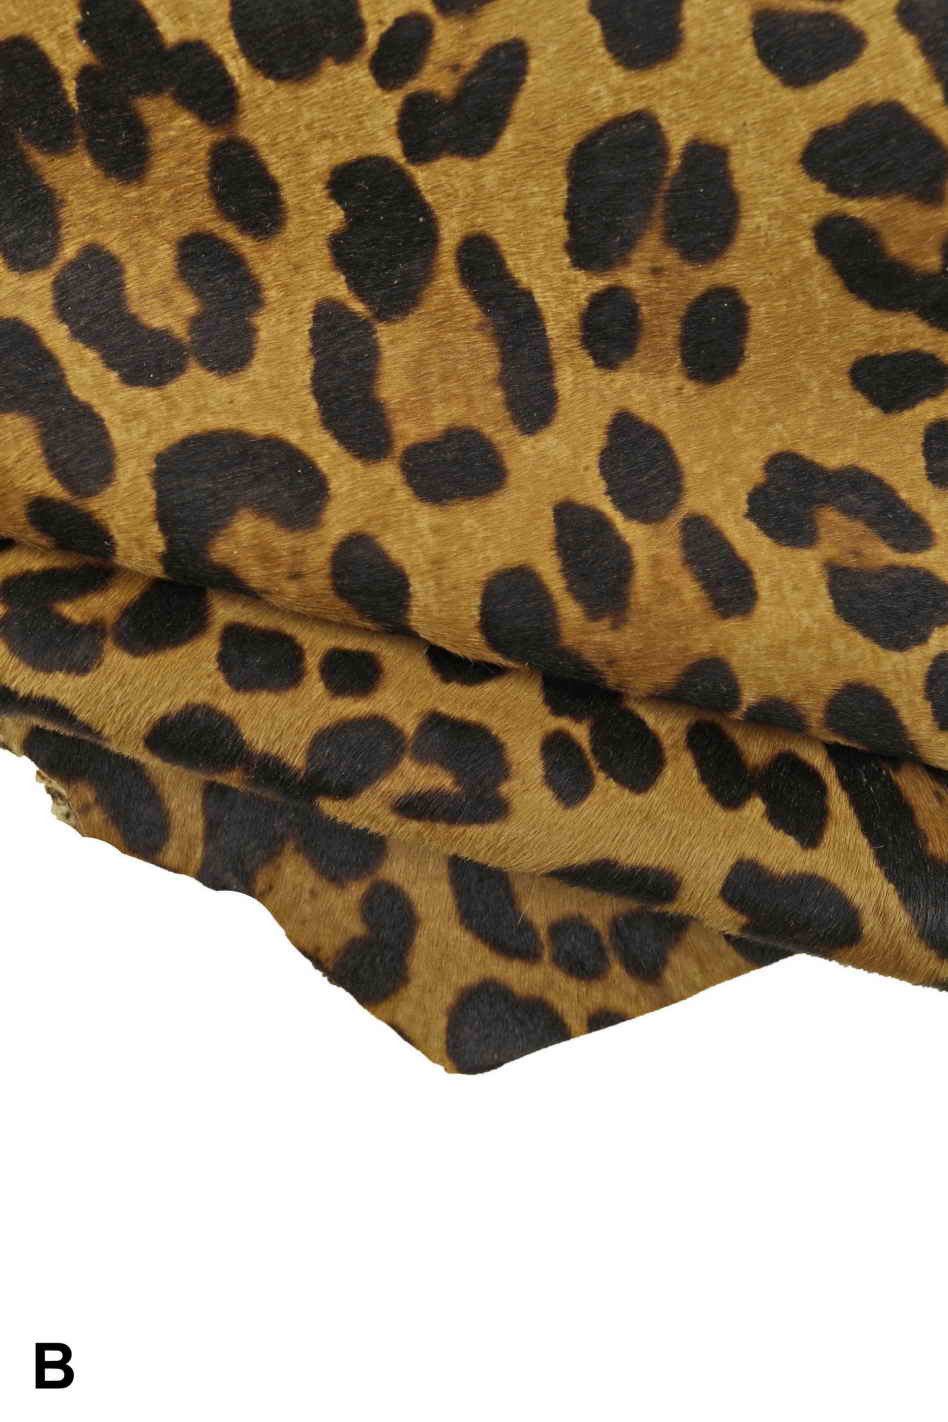 American Classics Leather - Leopard print - Hair on Hide Ottoman